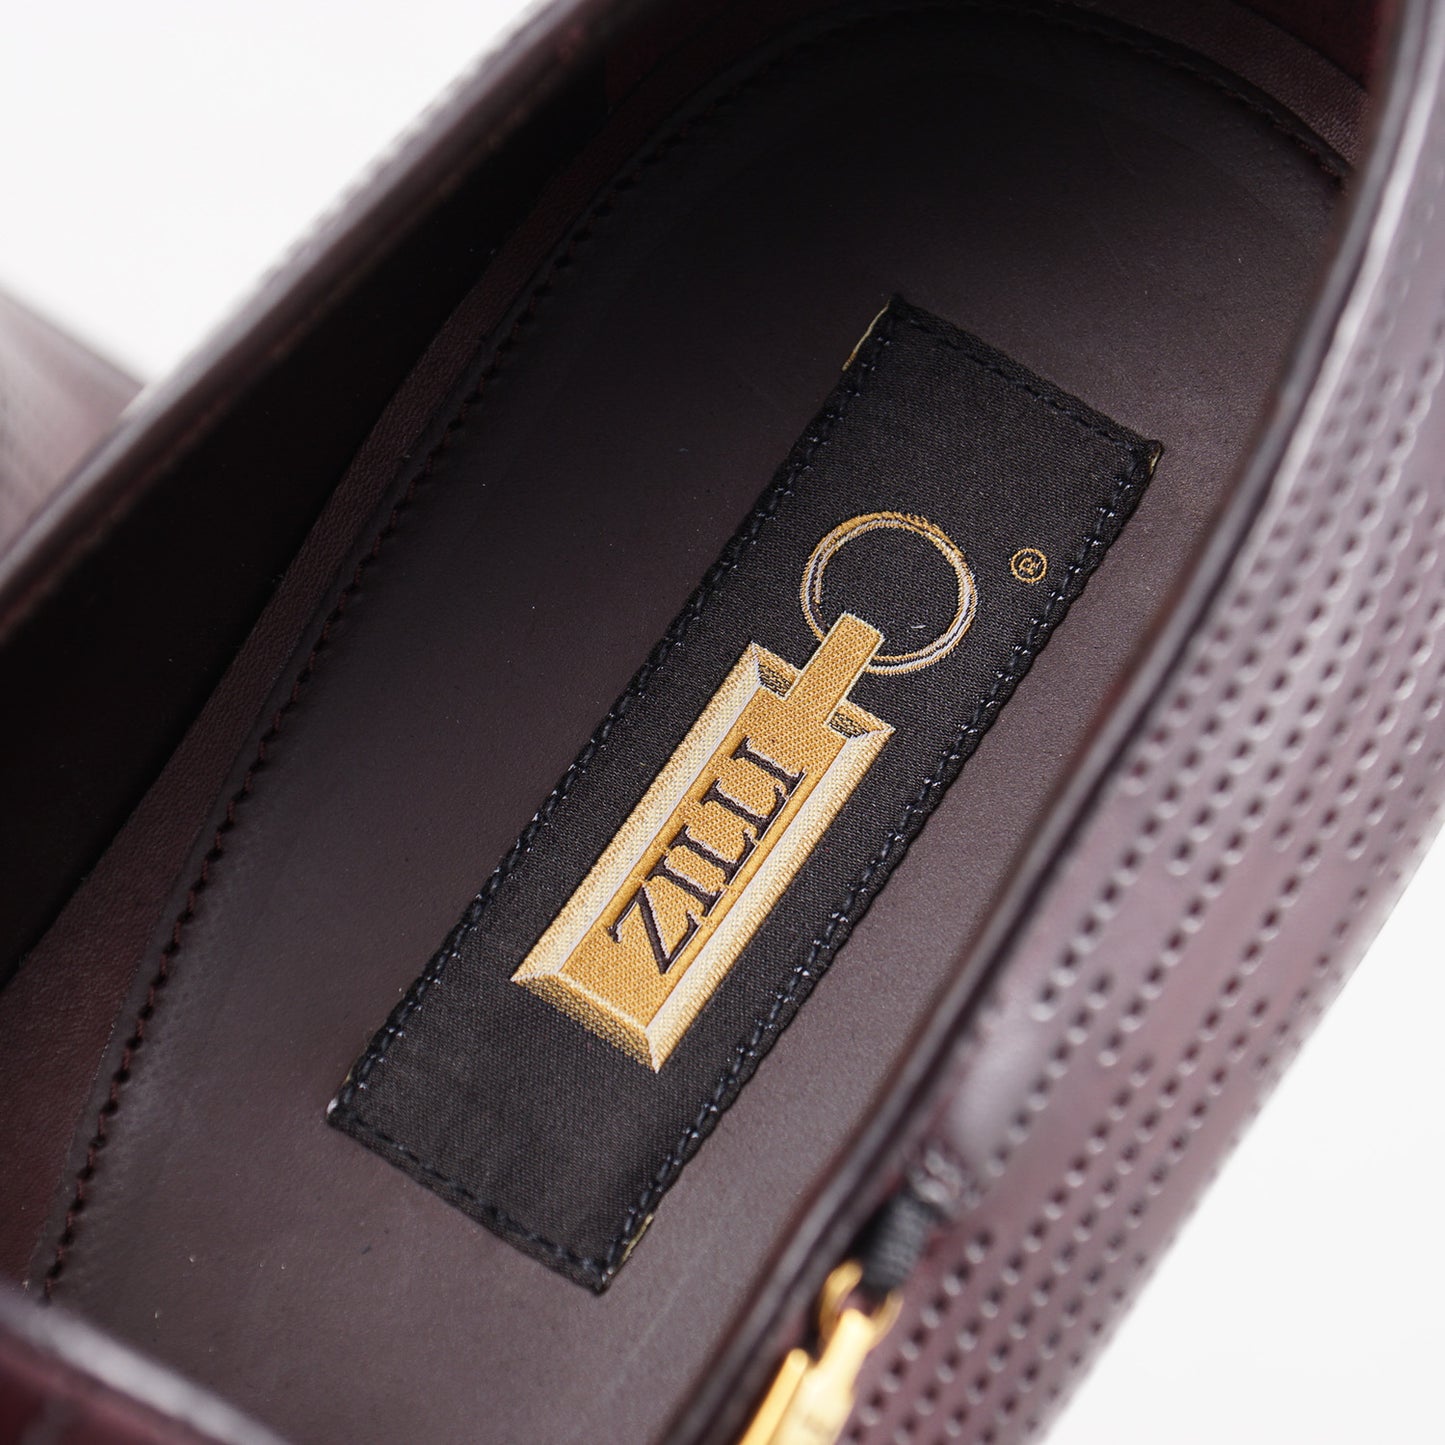 Zilli Burgundy Calf Leather Loafers - Top Shelf Apparel